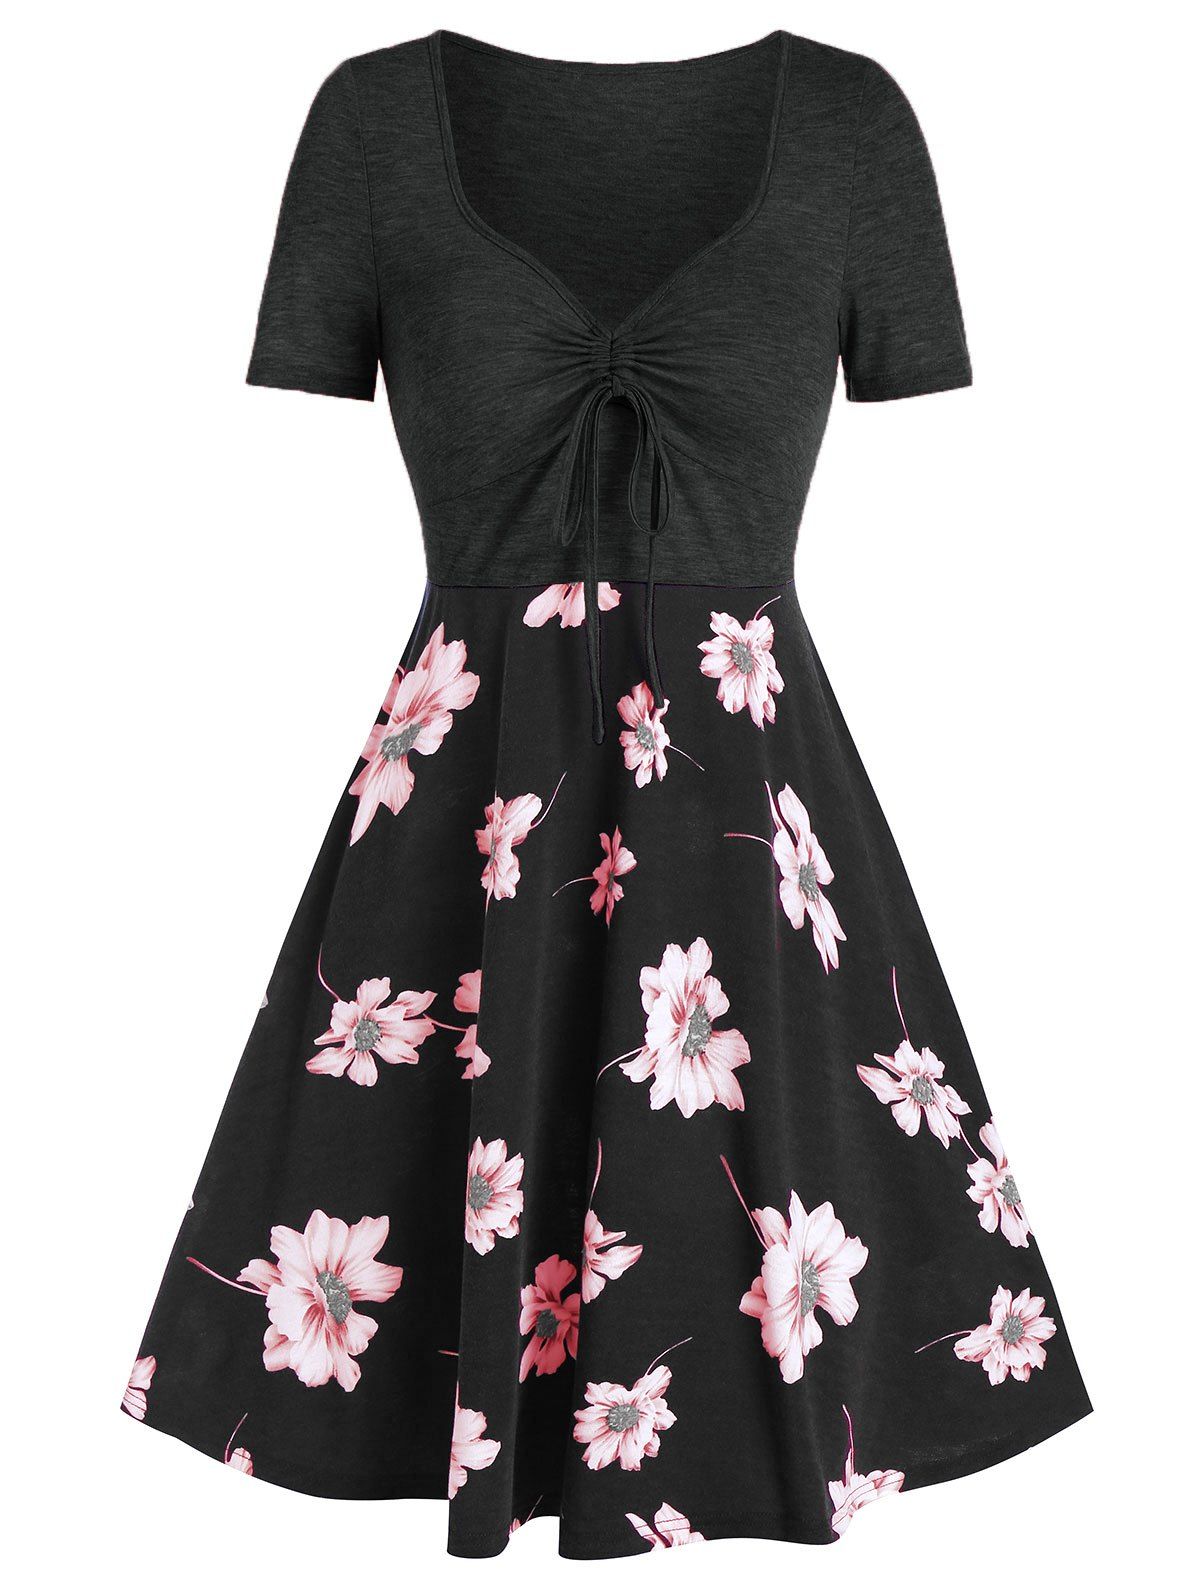 Printed Floral Drawstring High Waist Dress - BLACK XL